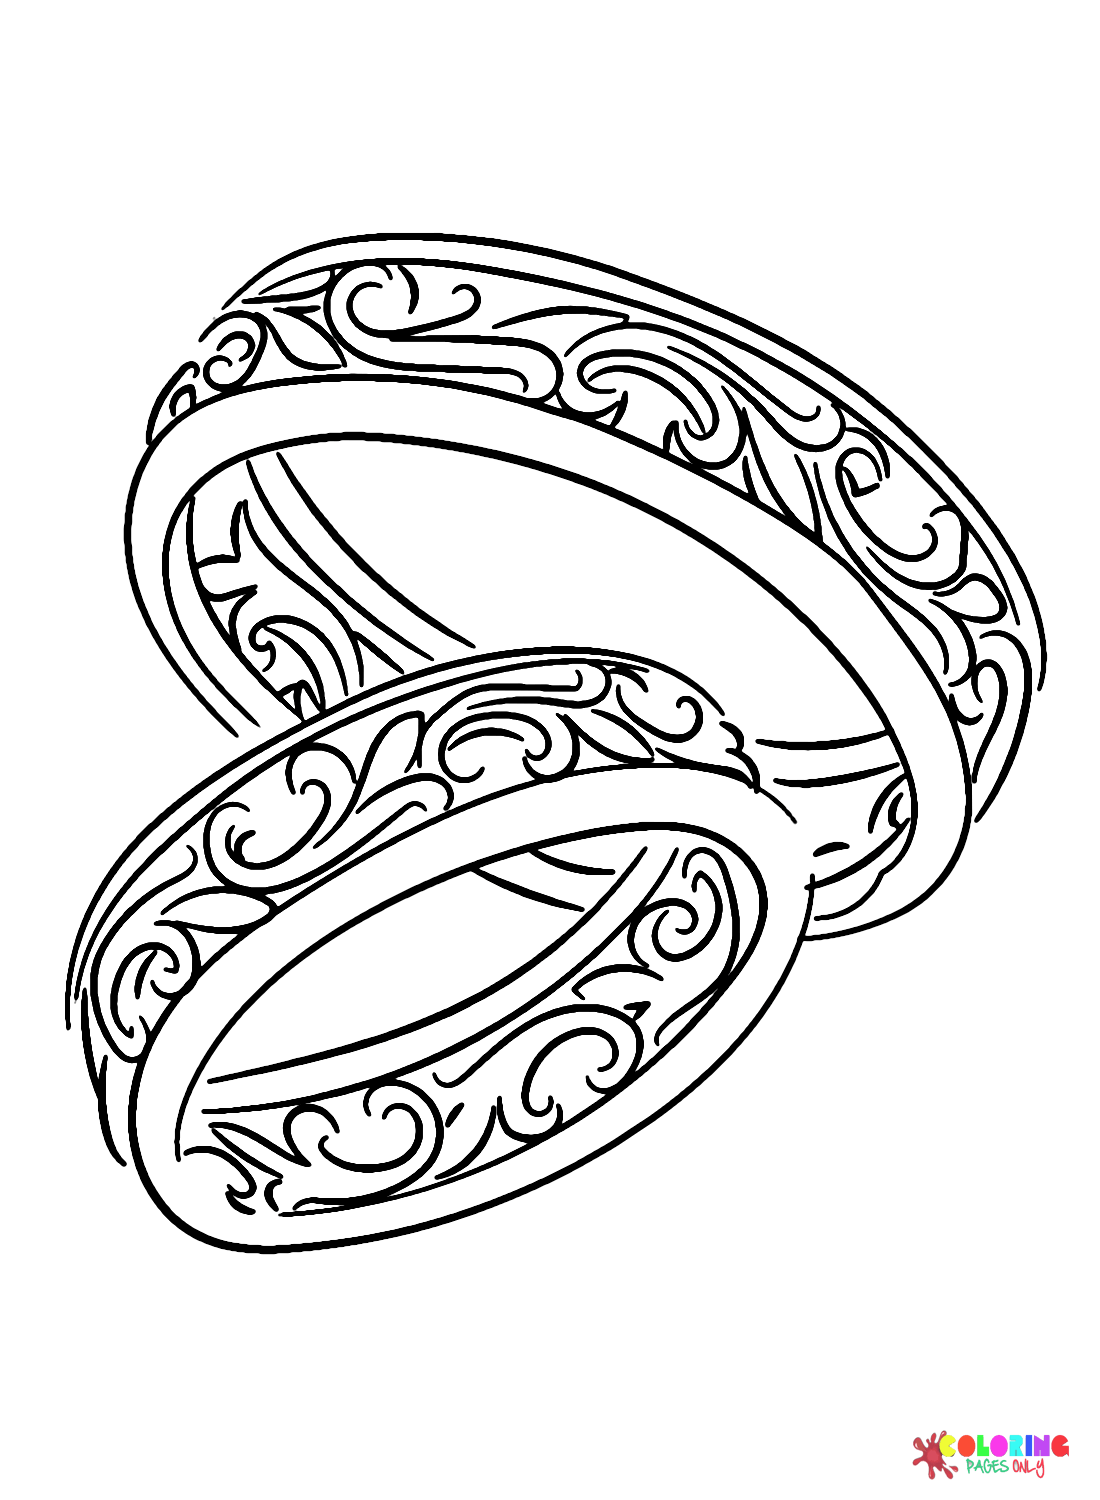 Wedding Ring Design from Wedding Ring